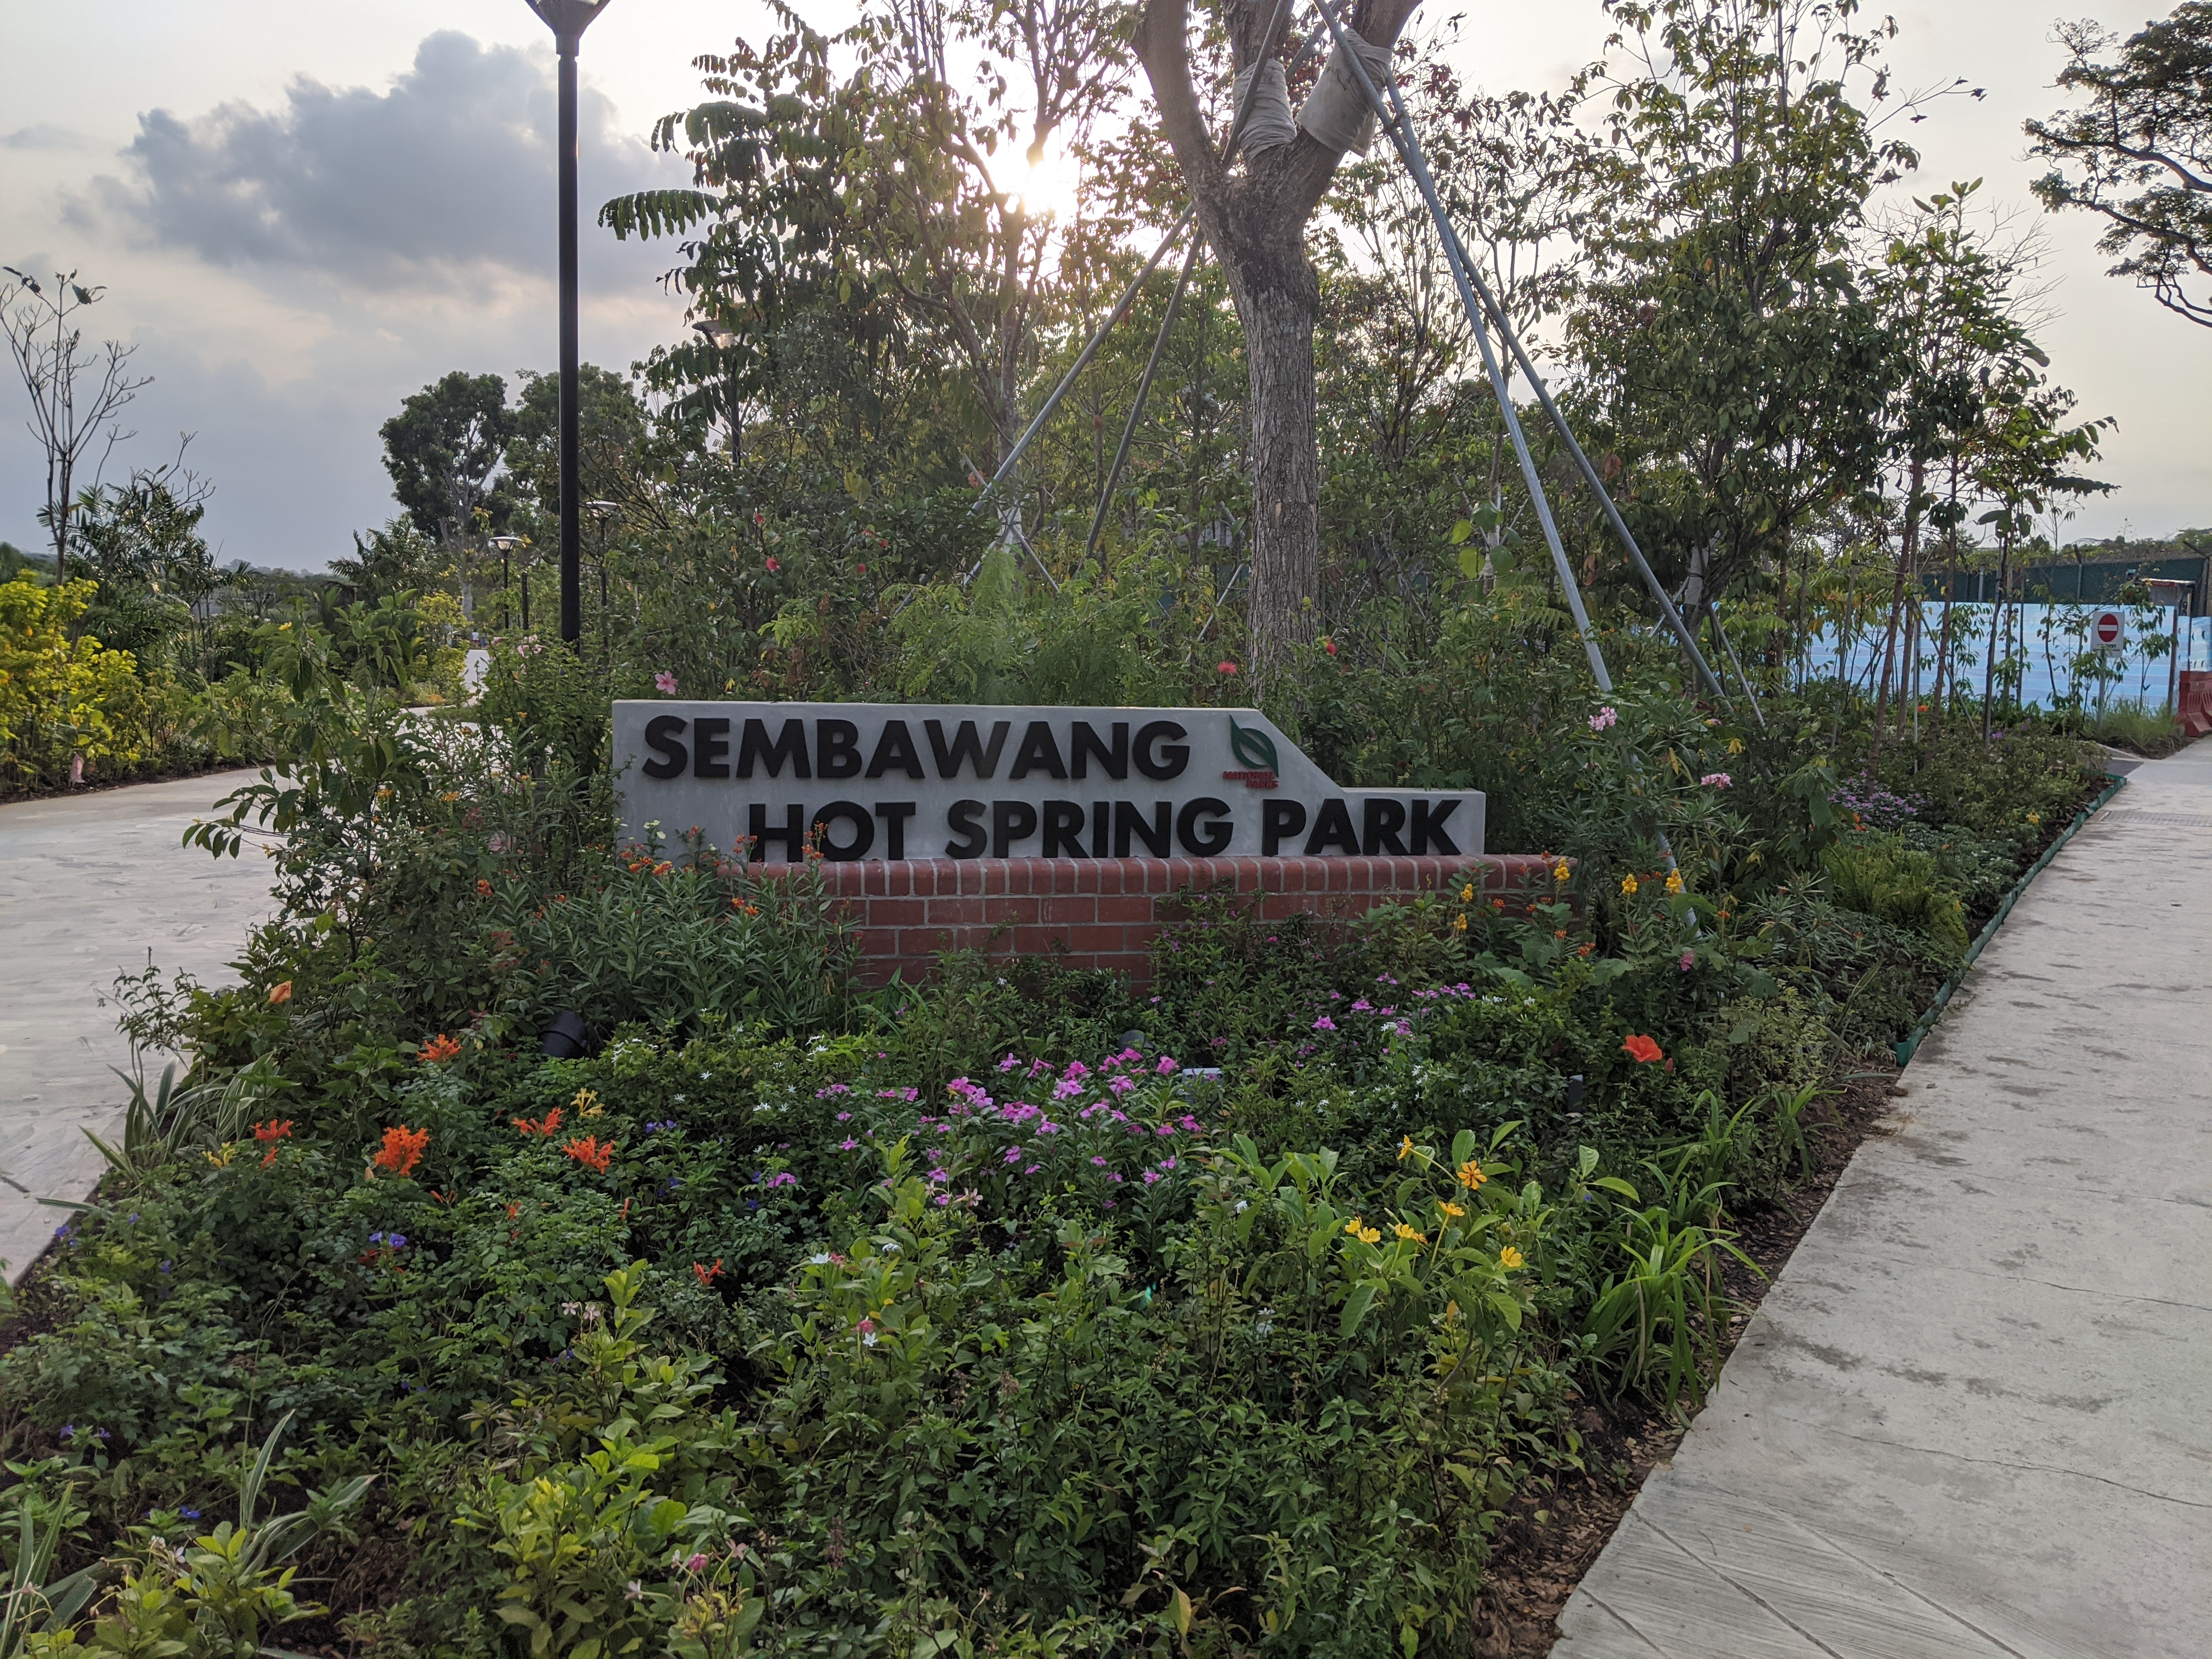 Sembawang Hot Spring Park Wikipedia